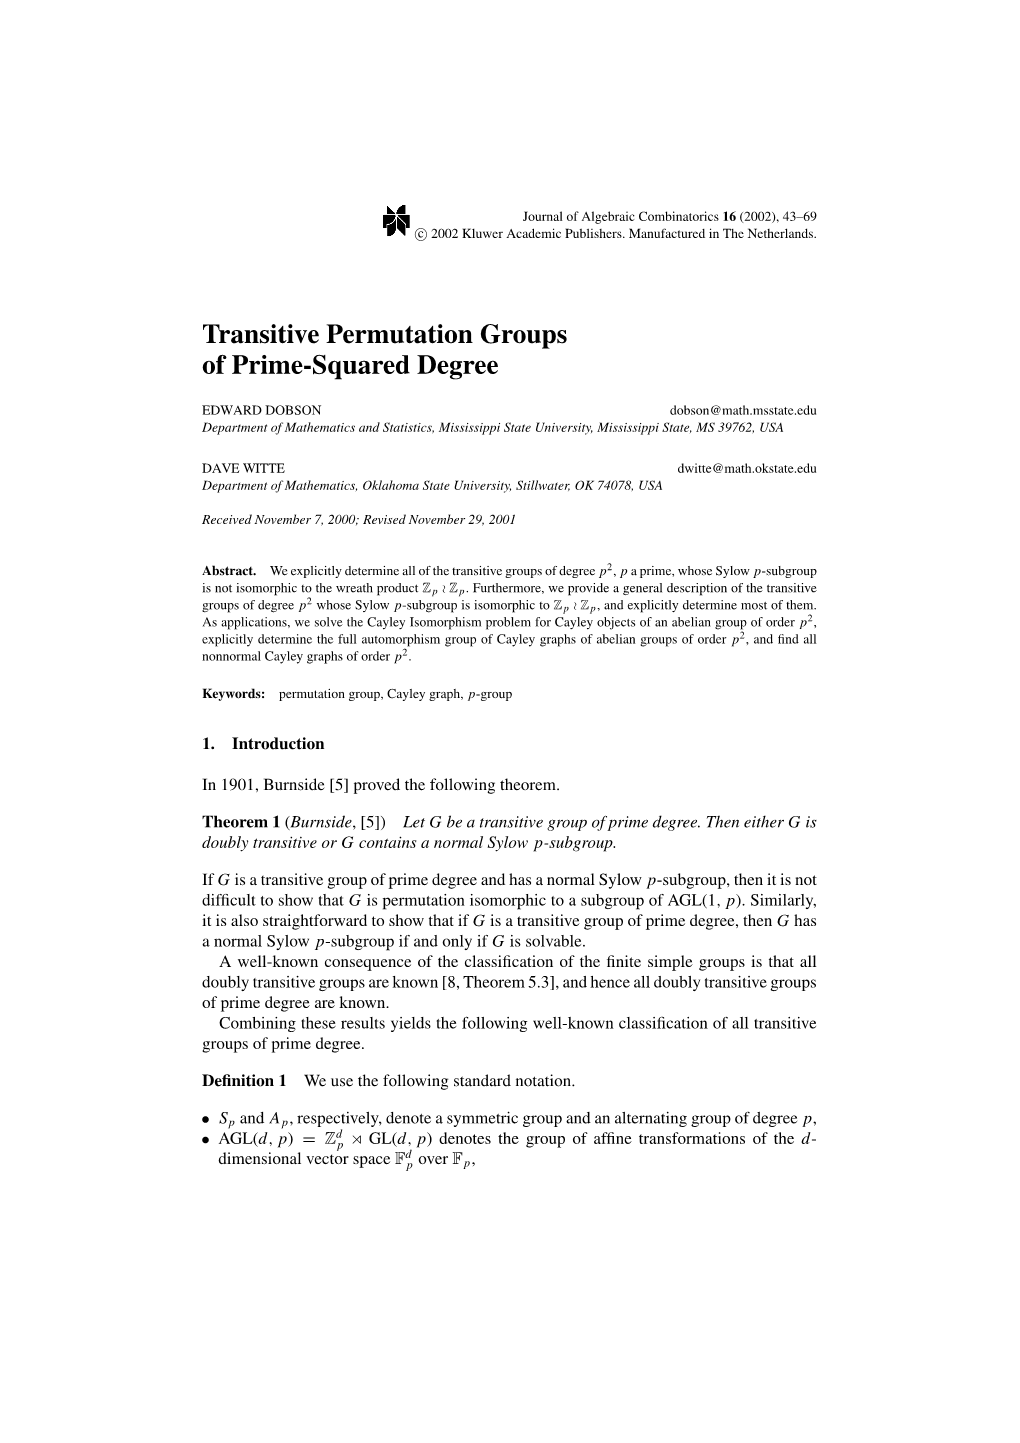 Transitive Permutation Groups of Prime-Squared Degree